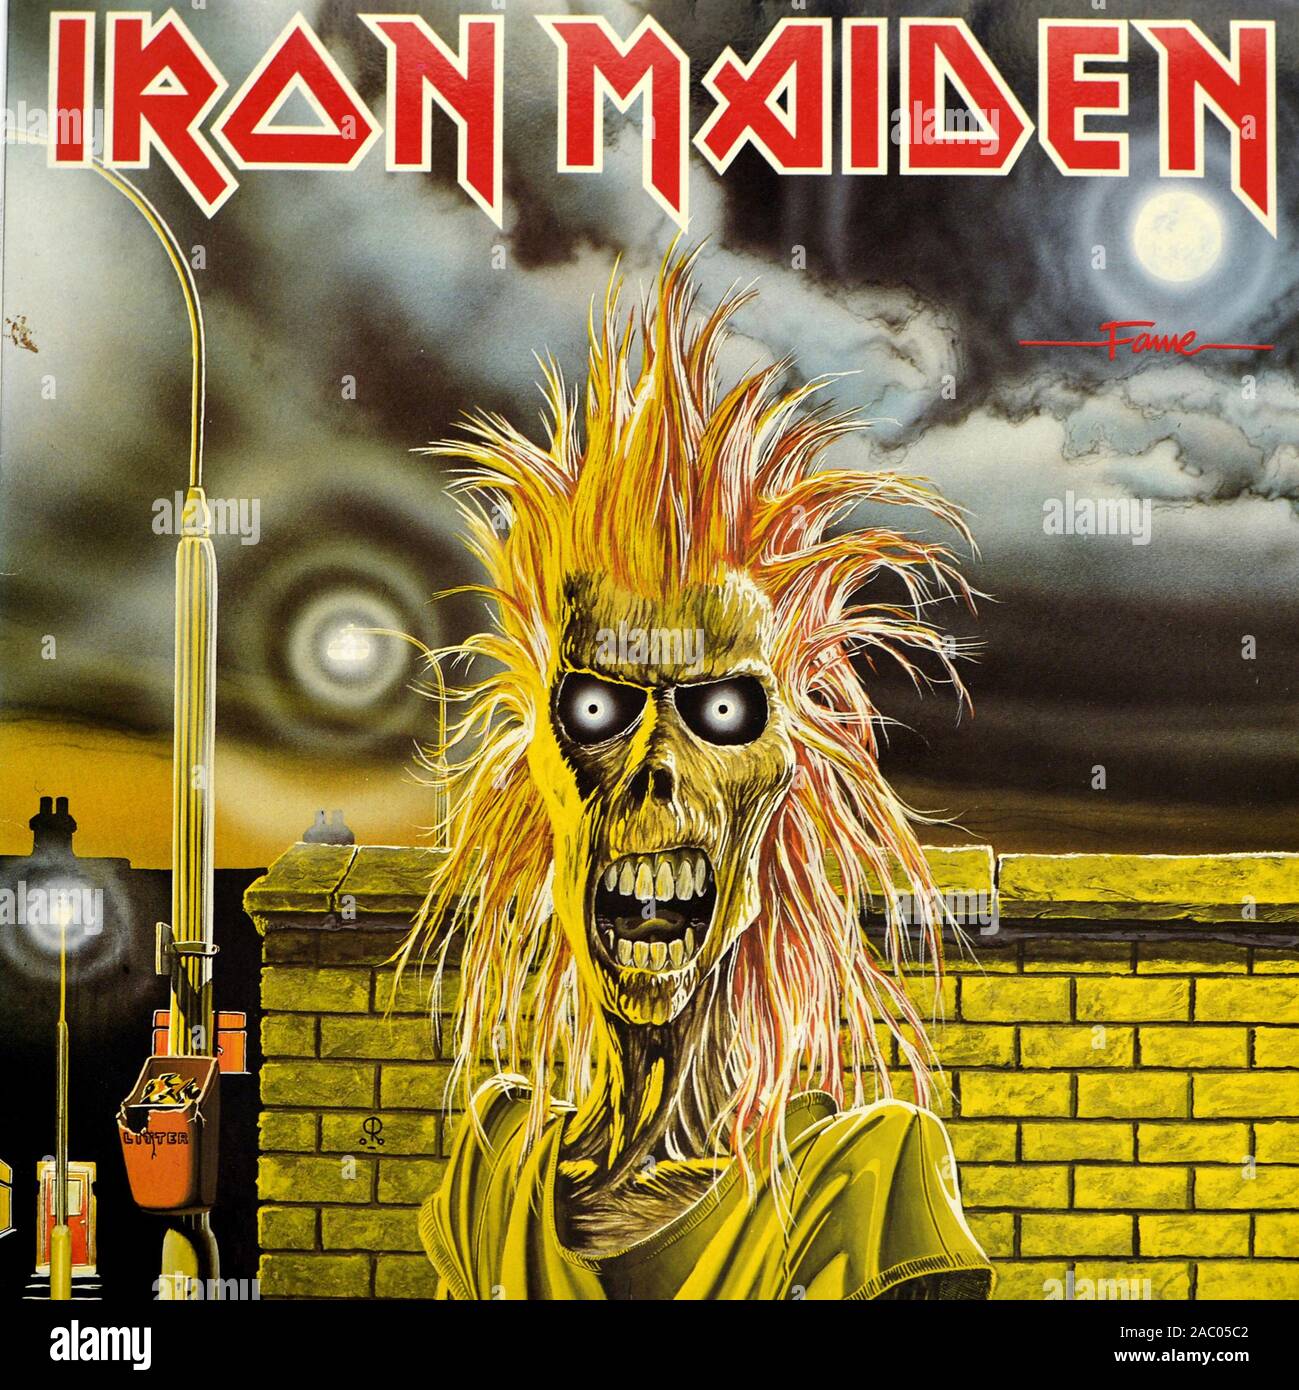 IRON MAIDEN Iron Maiden (Fame) - - Vintage vinile copertina album Foto Stock